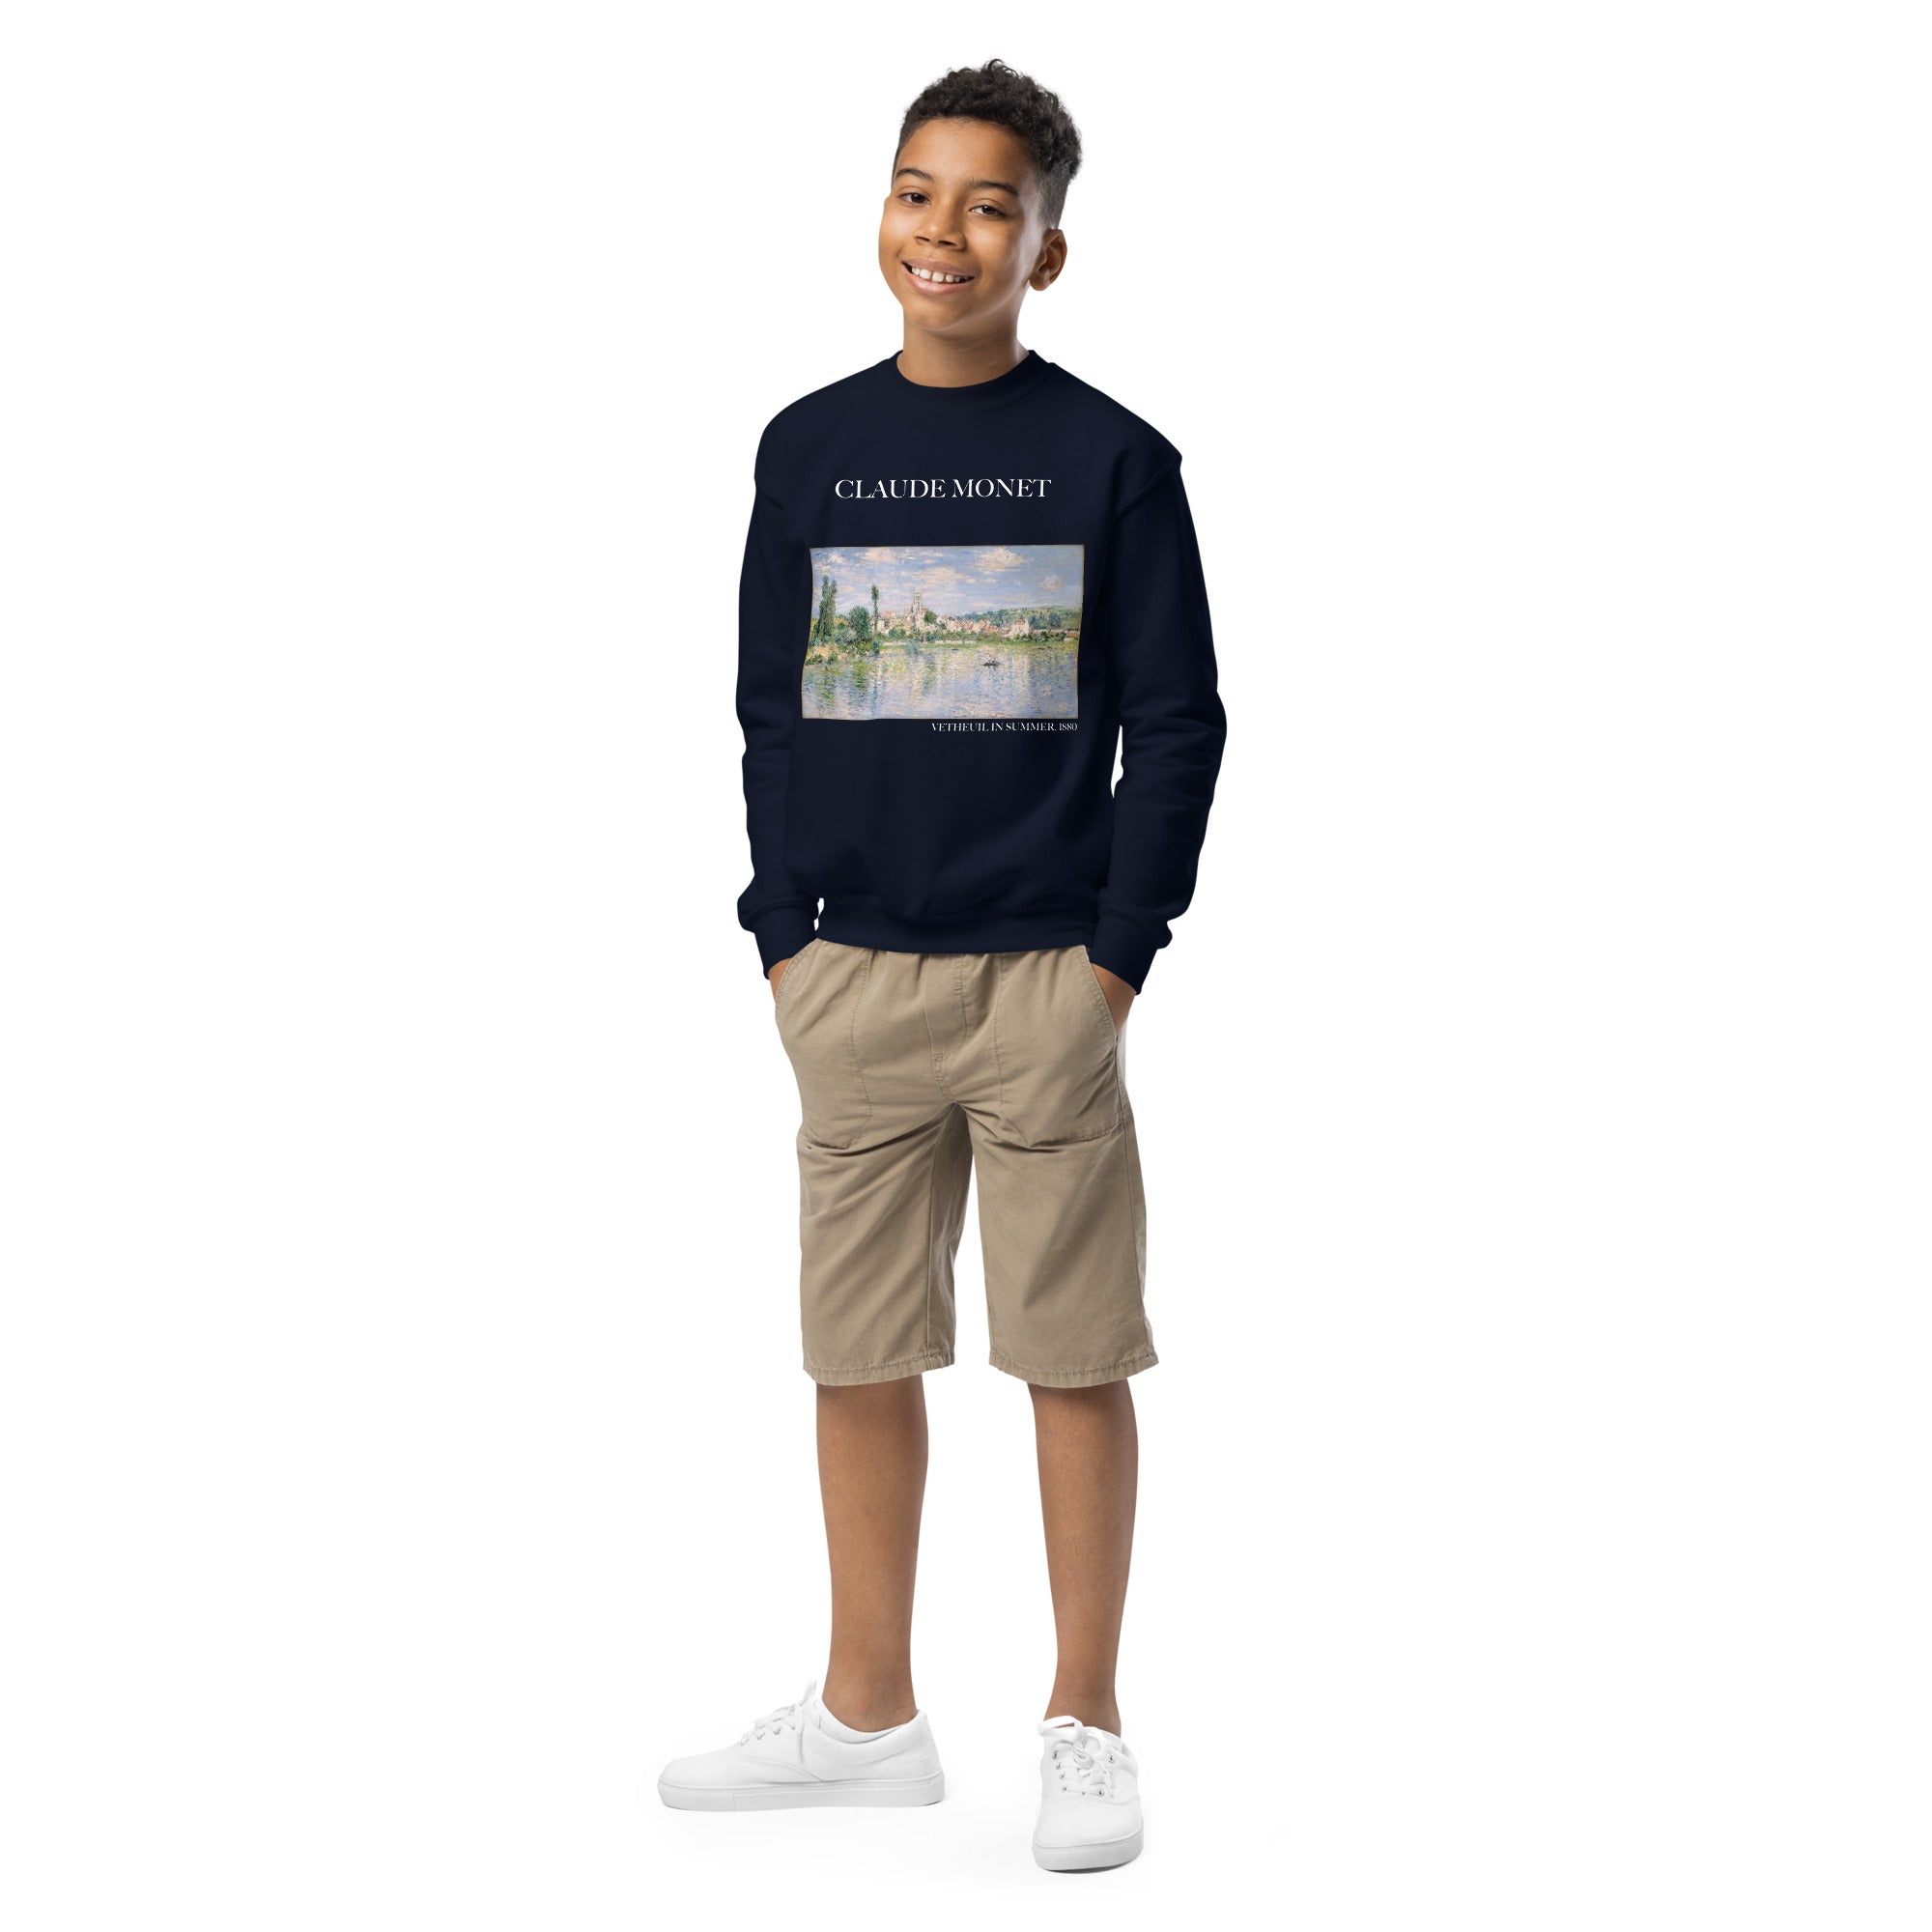 Claude Monet 'Vetheuil in Summer' Famous Painting Crewneck Sweatshirt | Premium Youth Art Sweatshirt